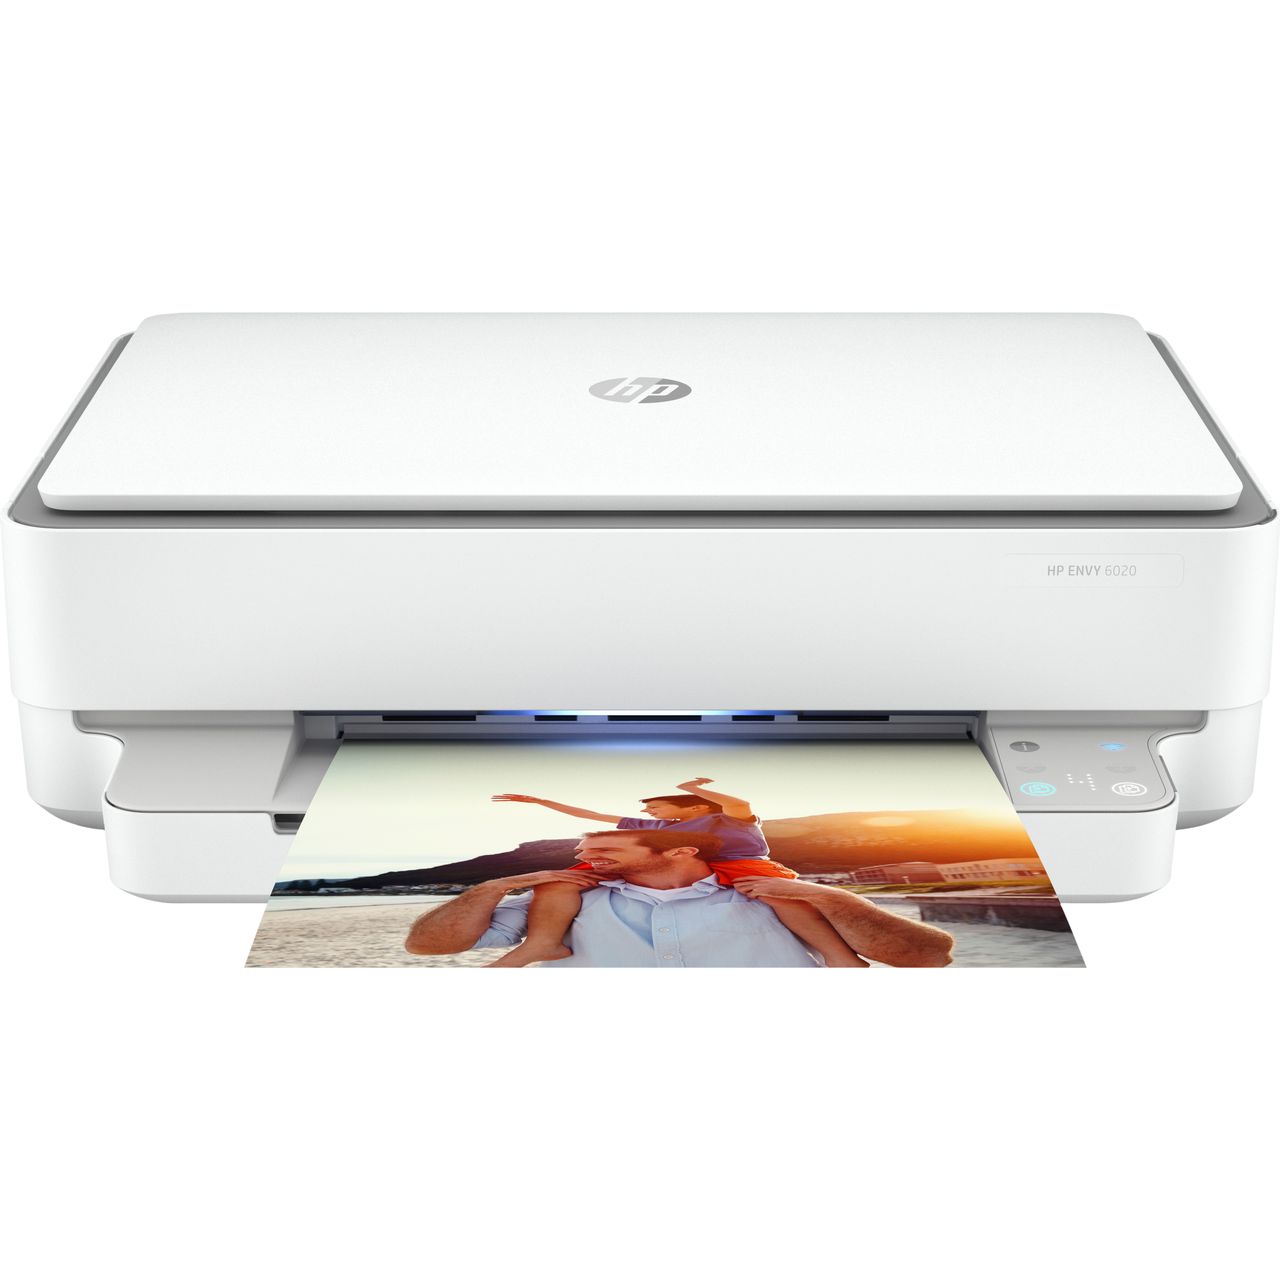 HP Envy 6020 Inkjet Printer Review